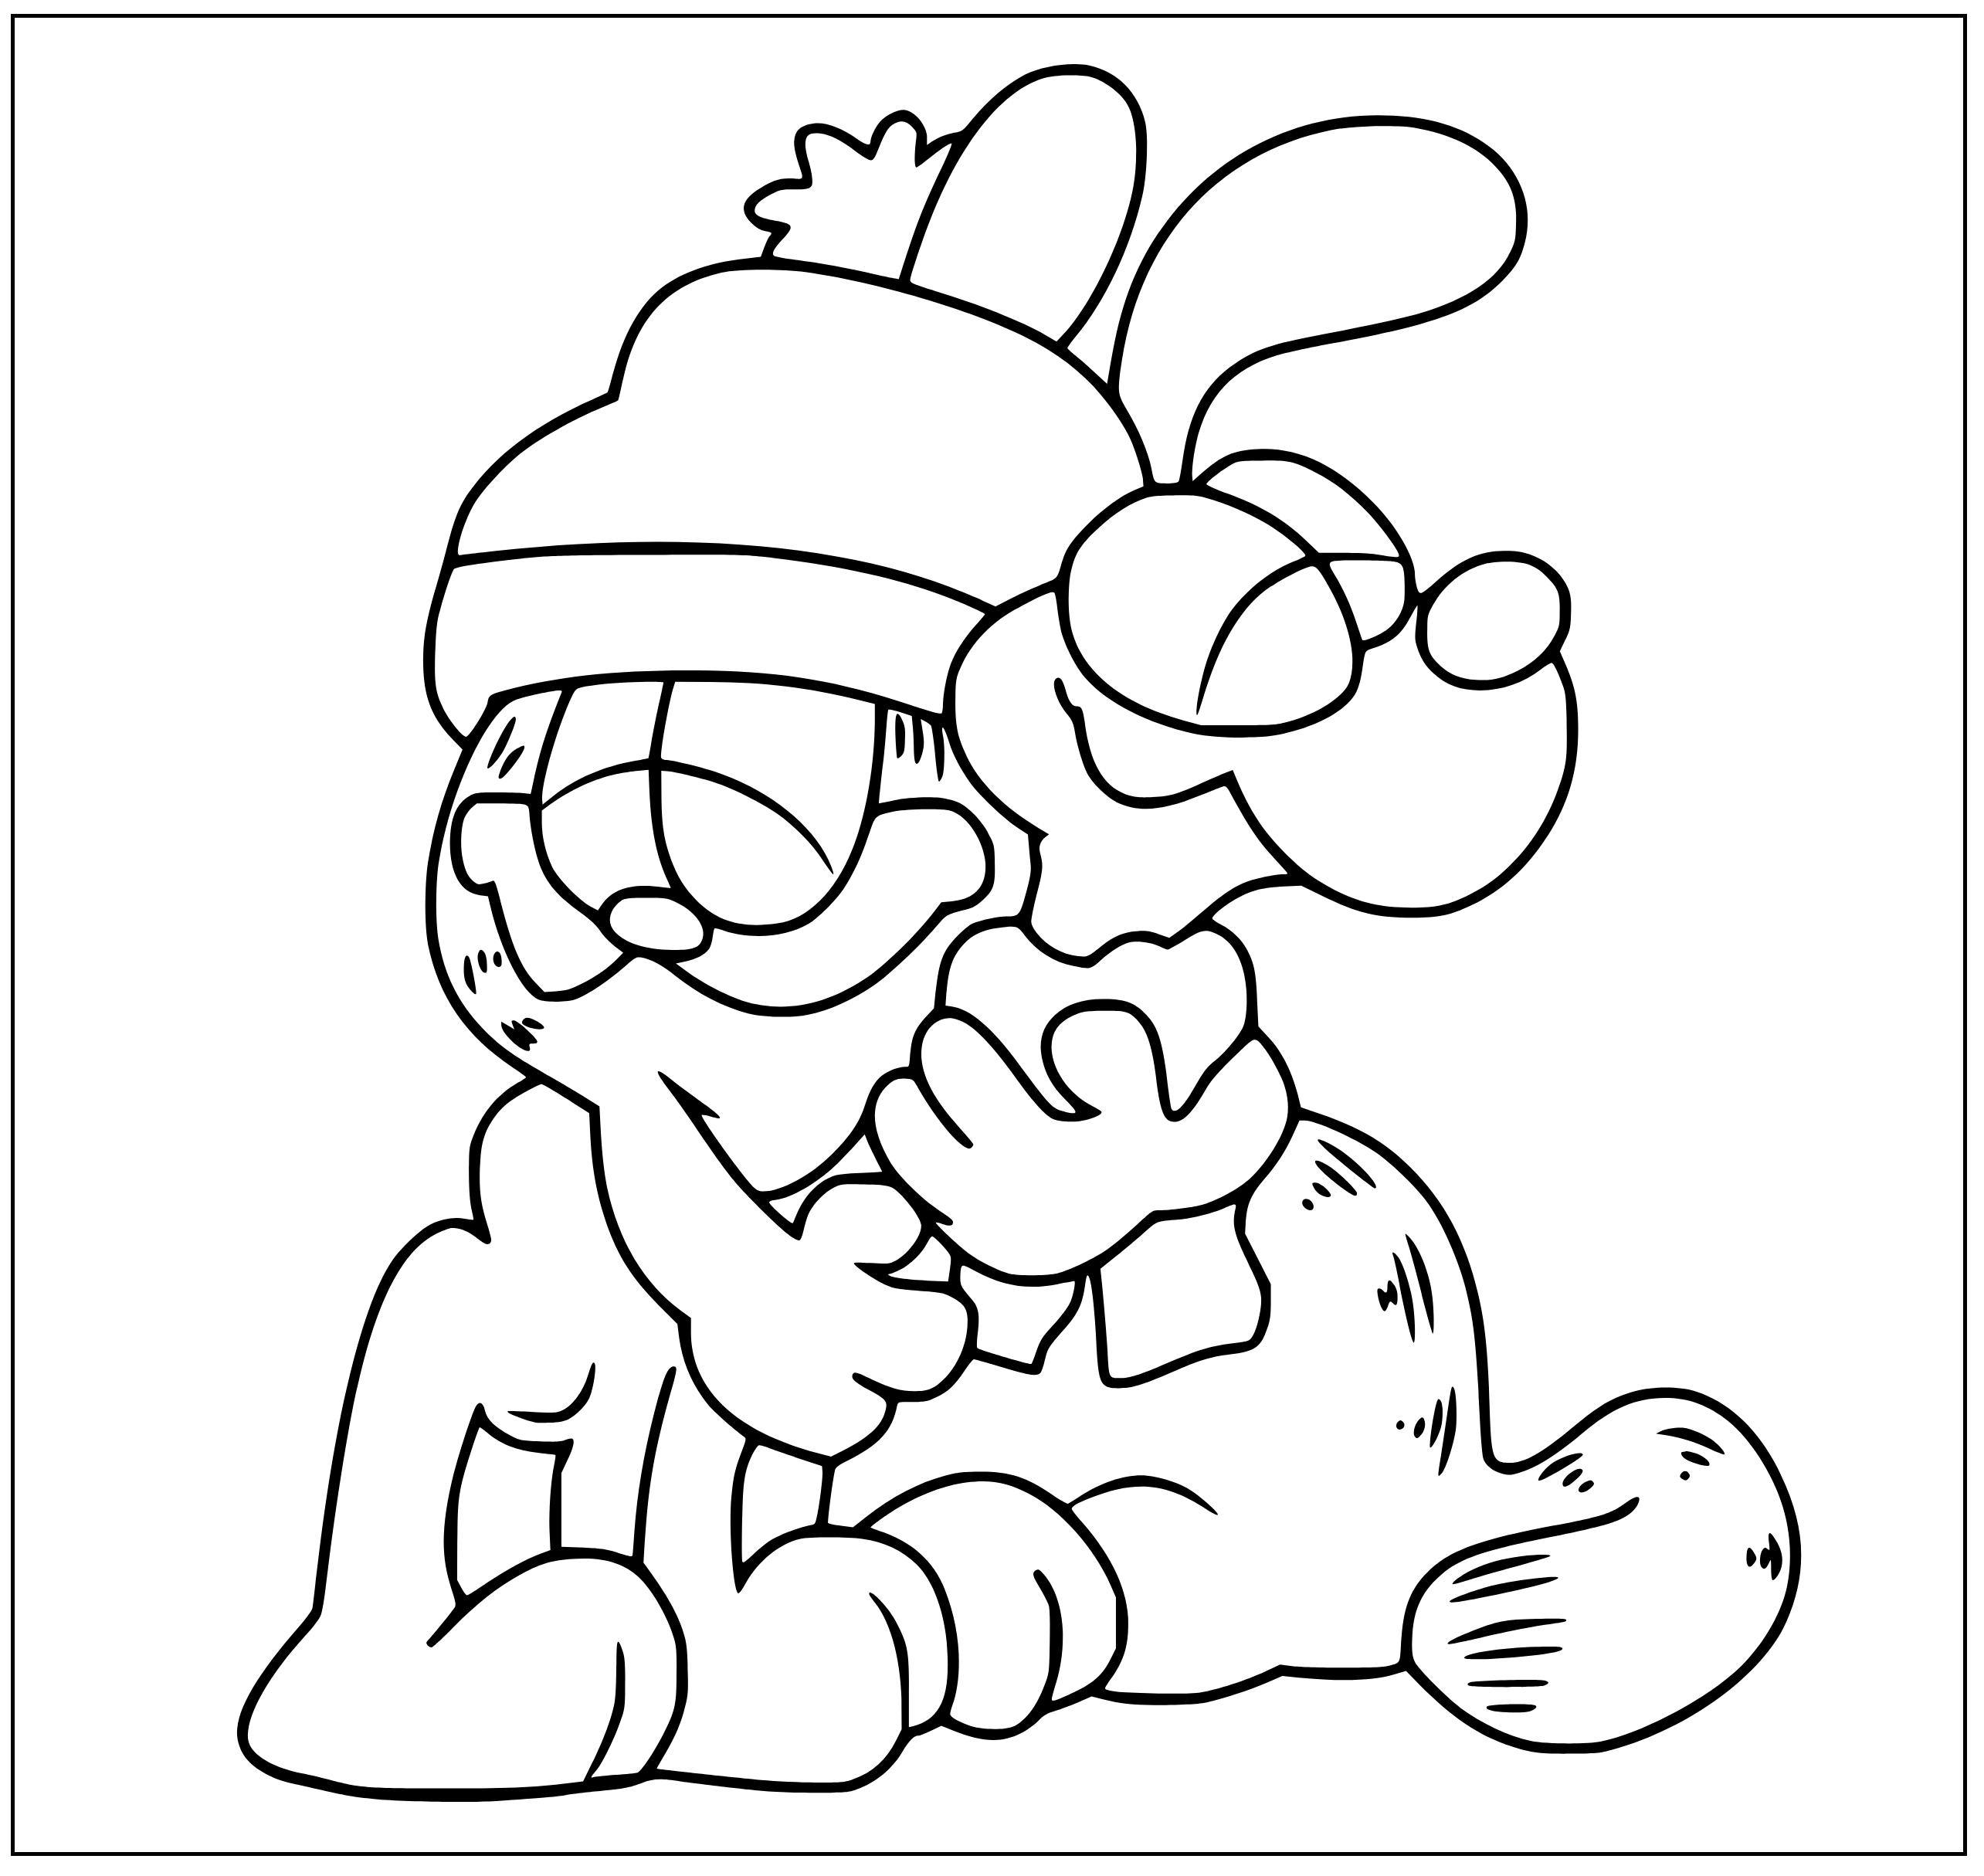 Printable Garfield hugging Odie Coloring Page for kids.